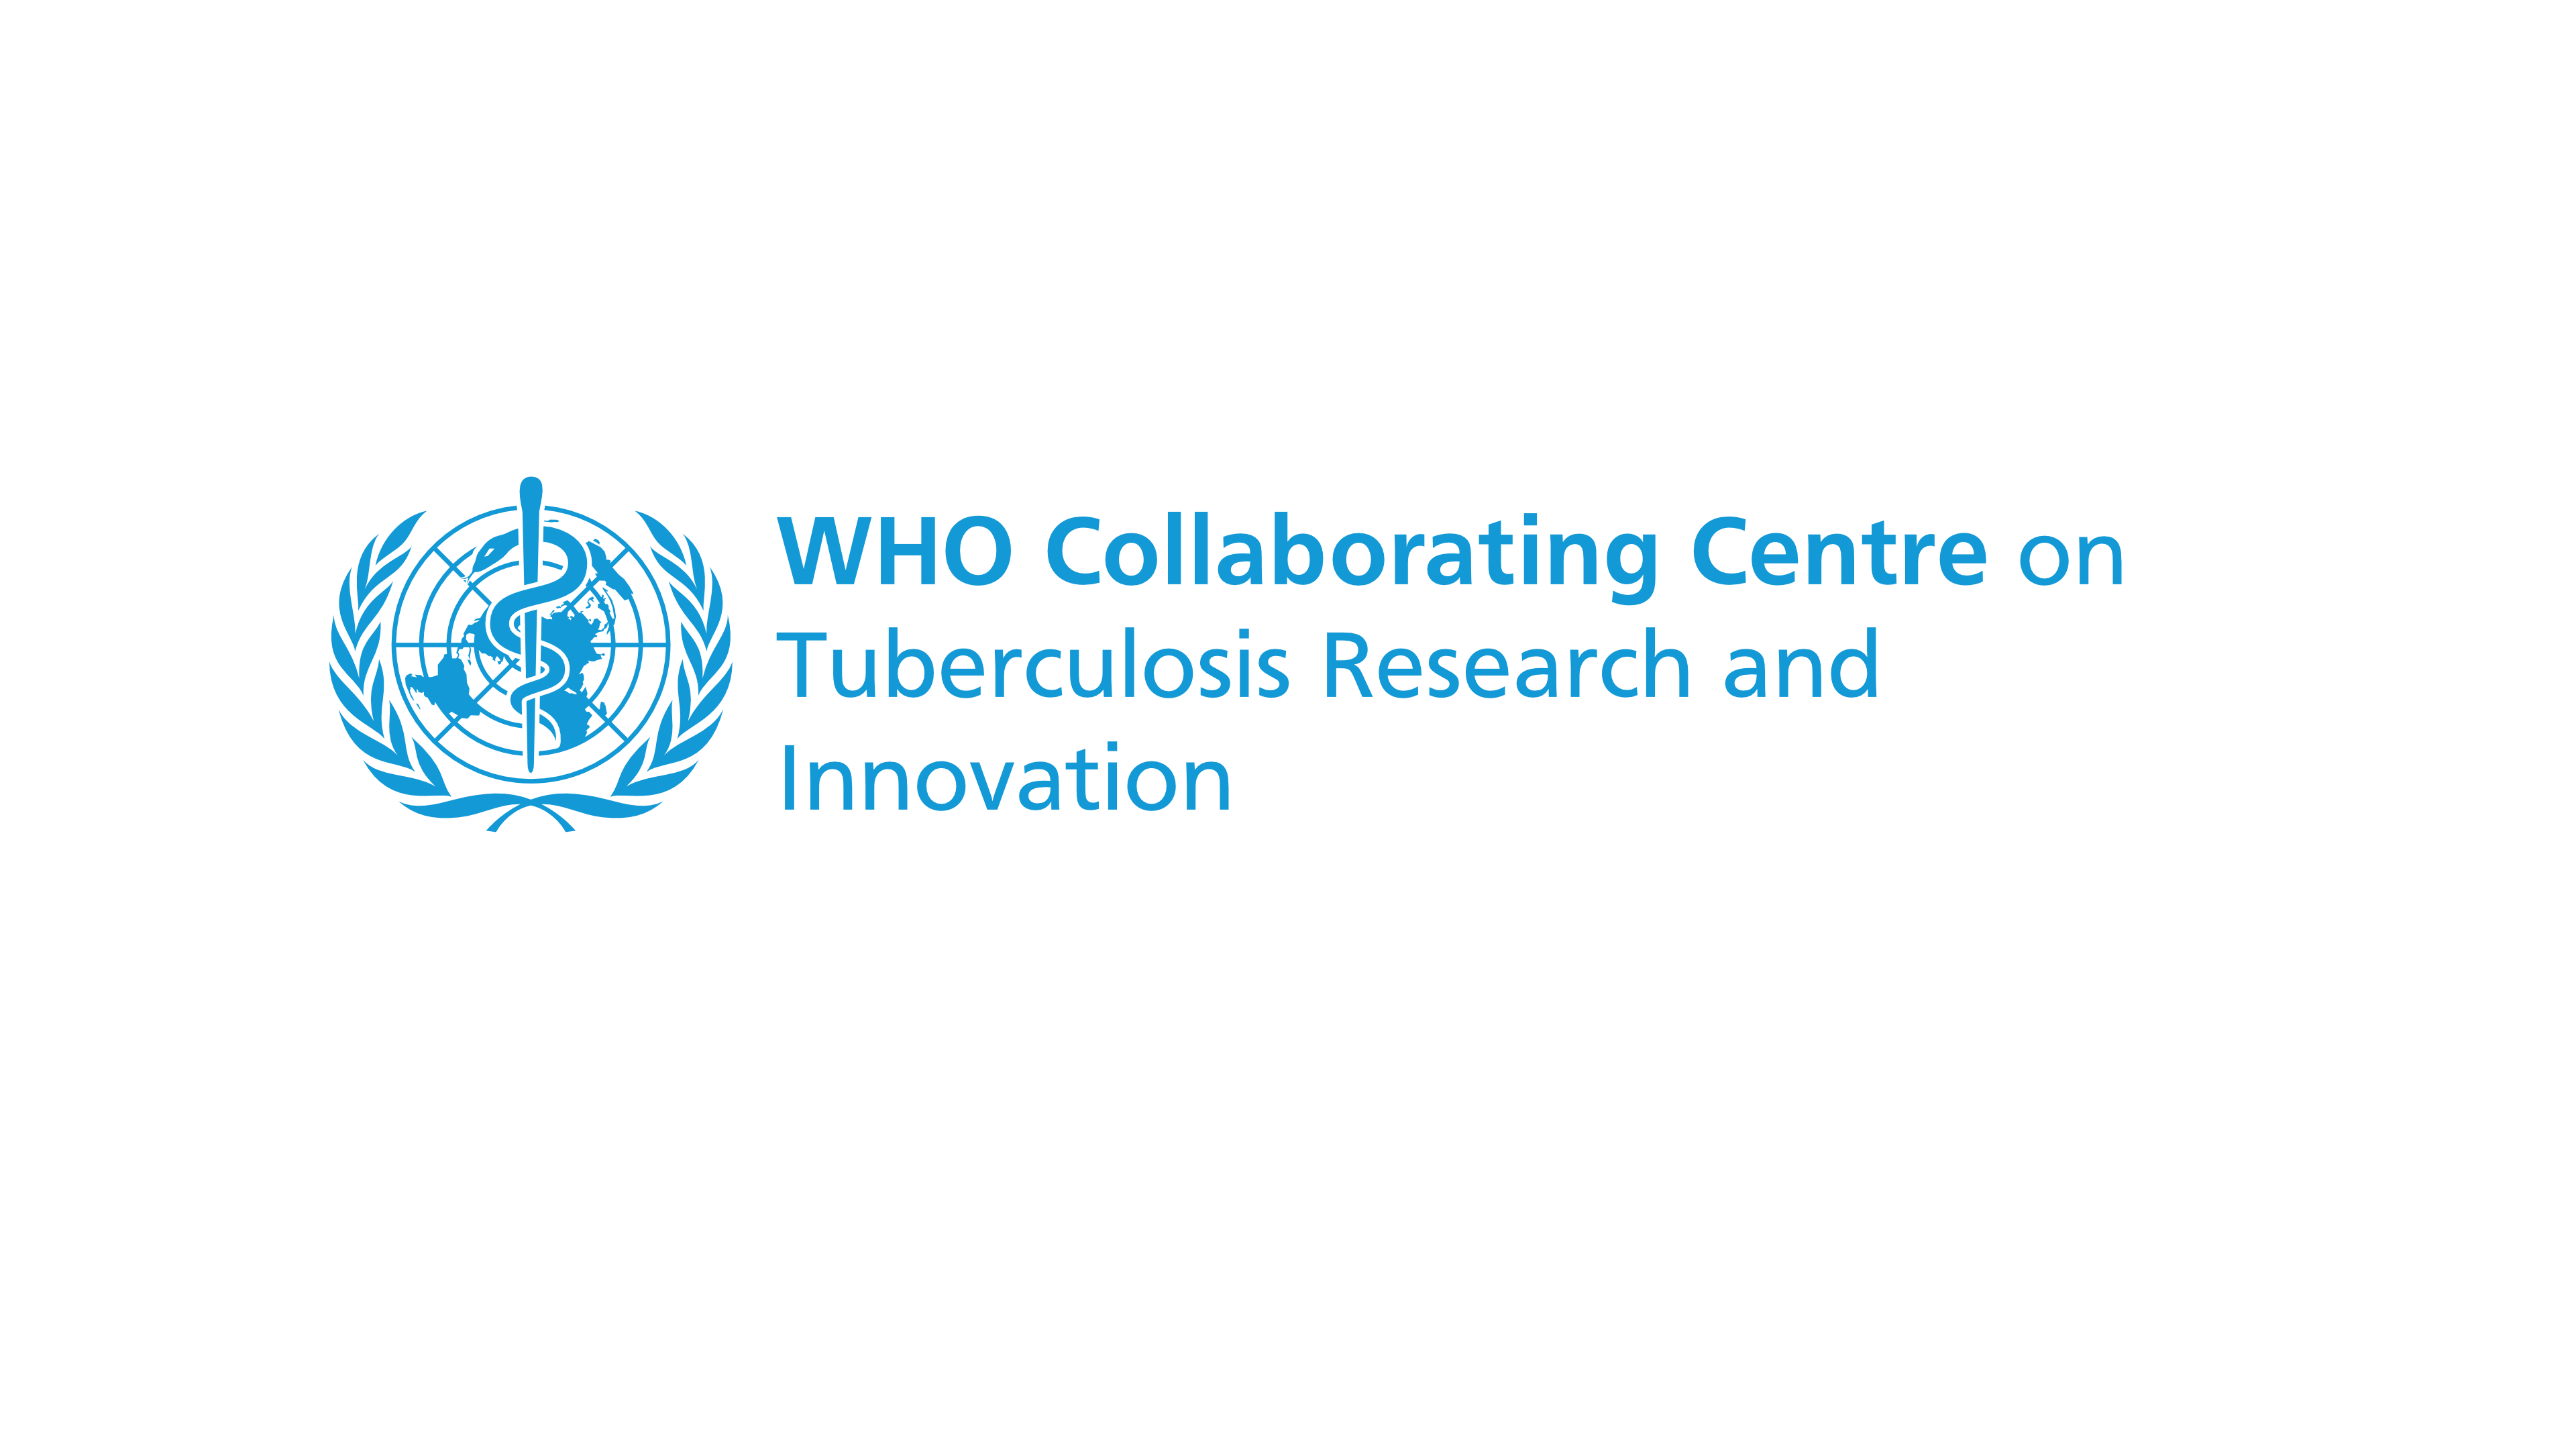 WHO Collaborating Centre Logo